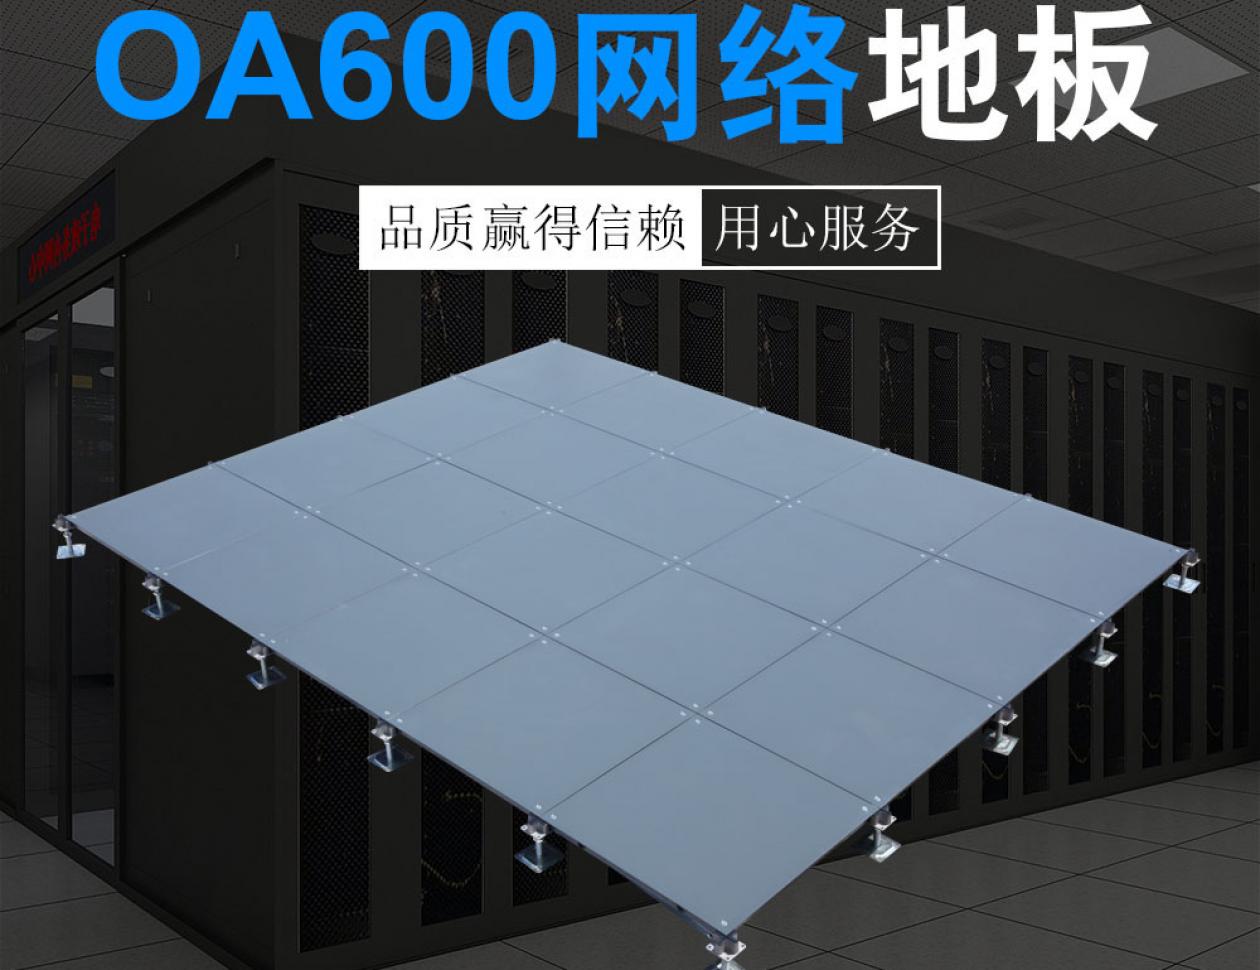 OA600网络地板